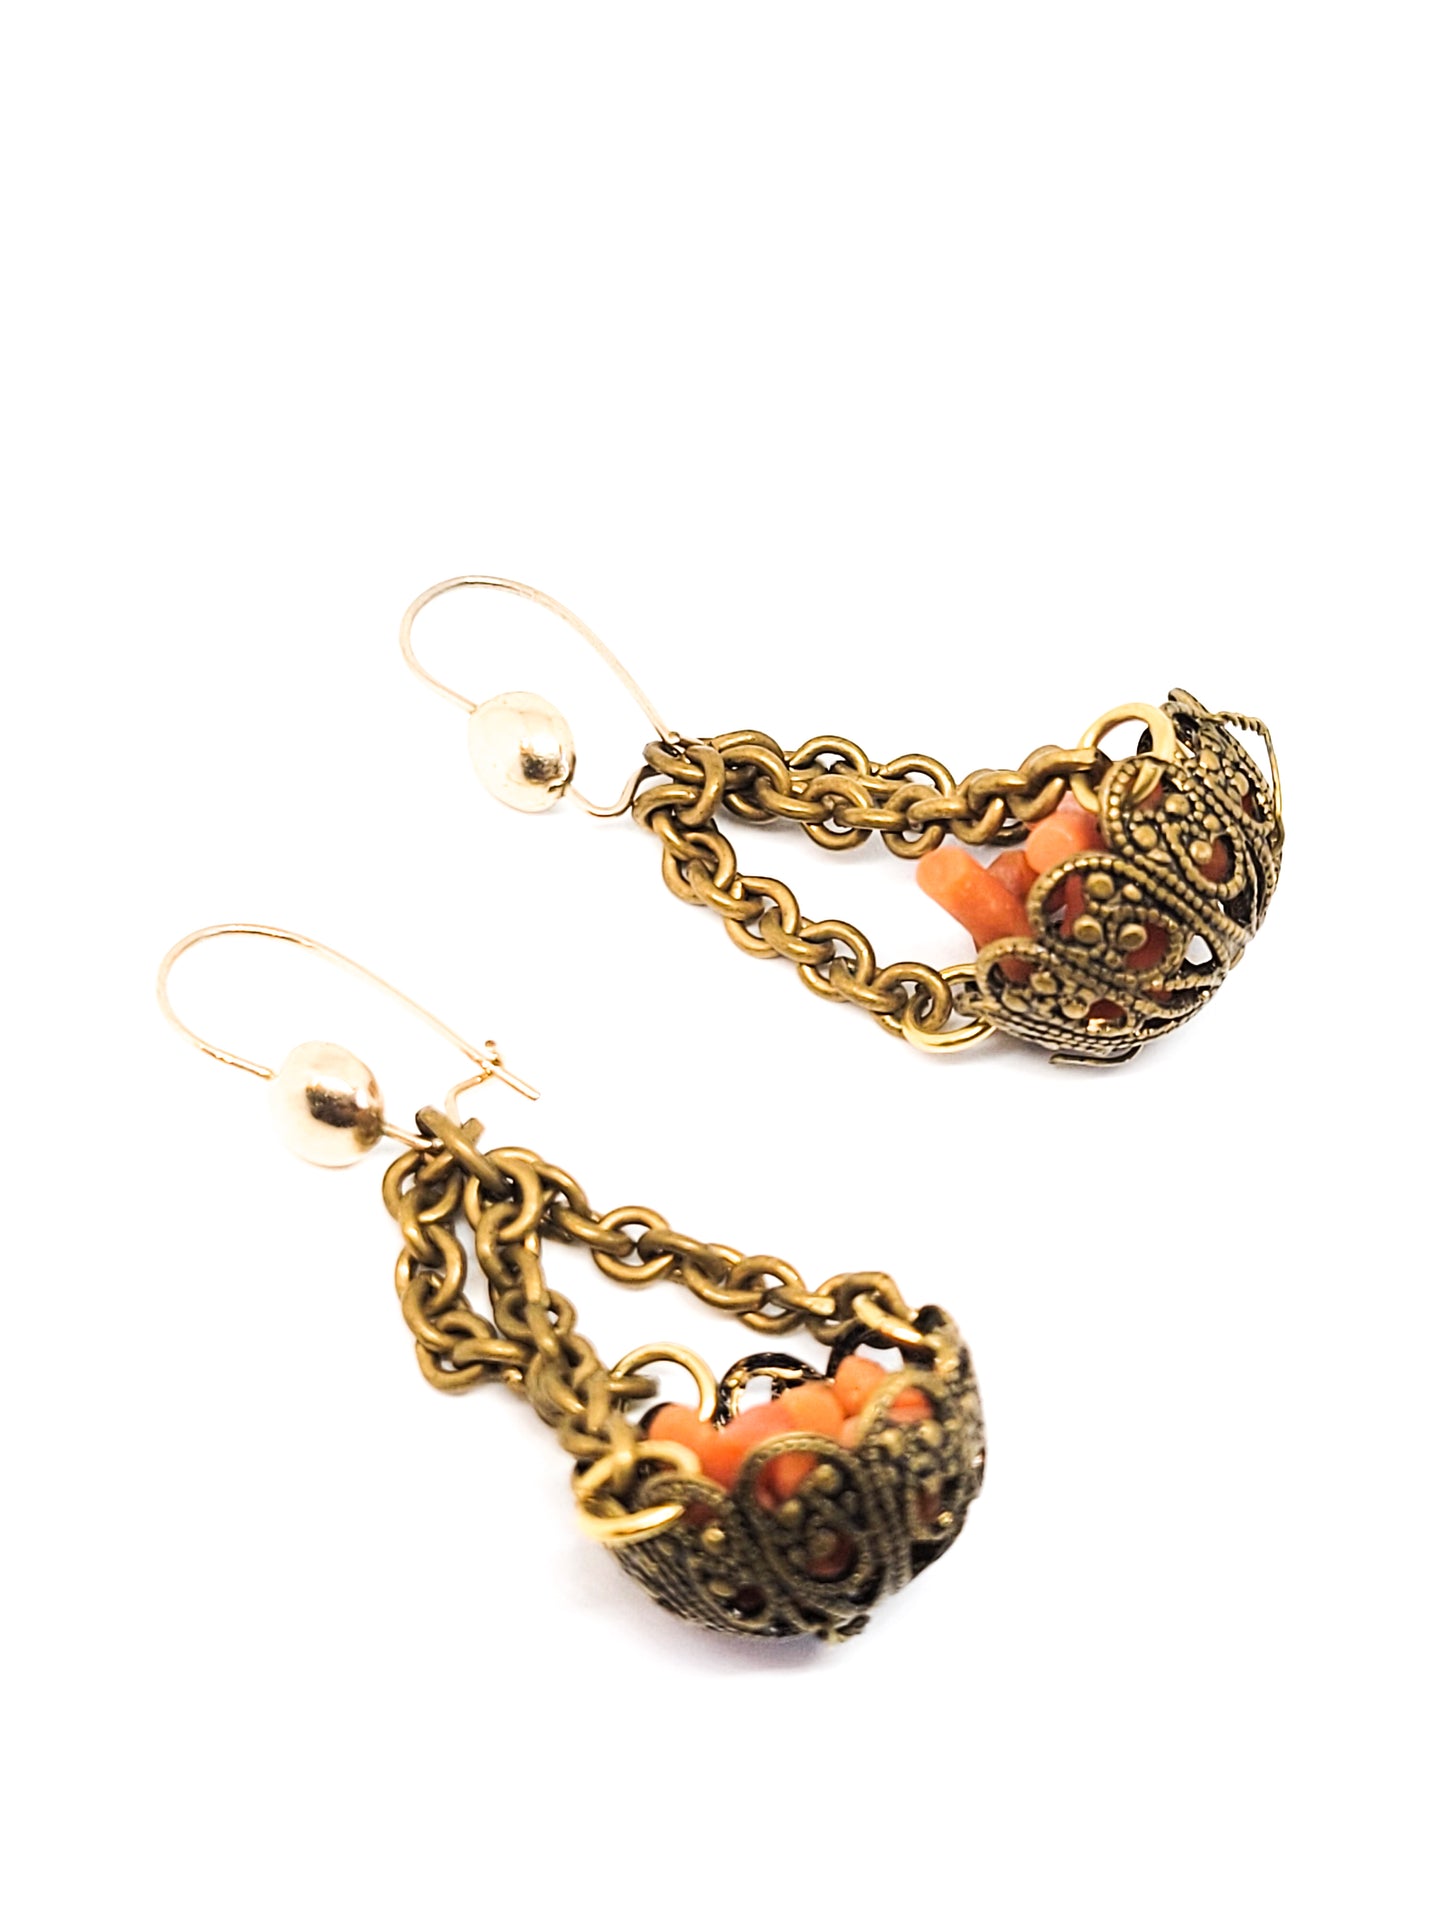 Italian Genuine branch coral hanging basket 10kt gold filled vintage earrings